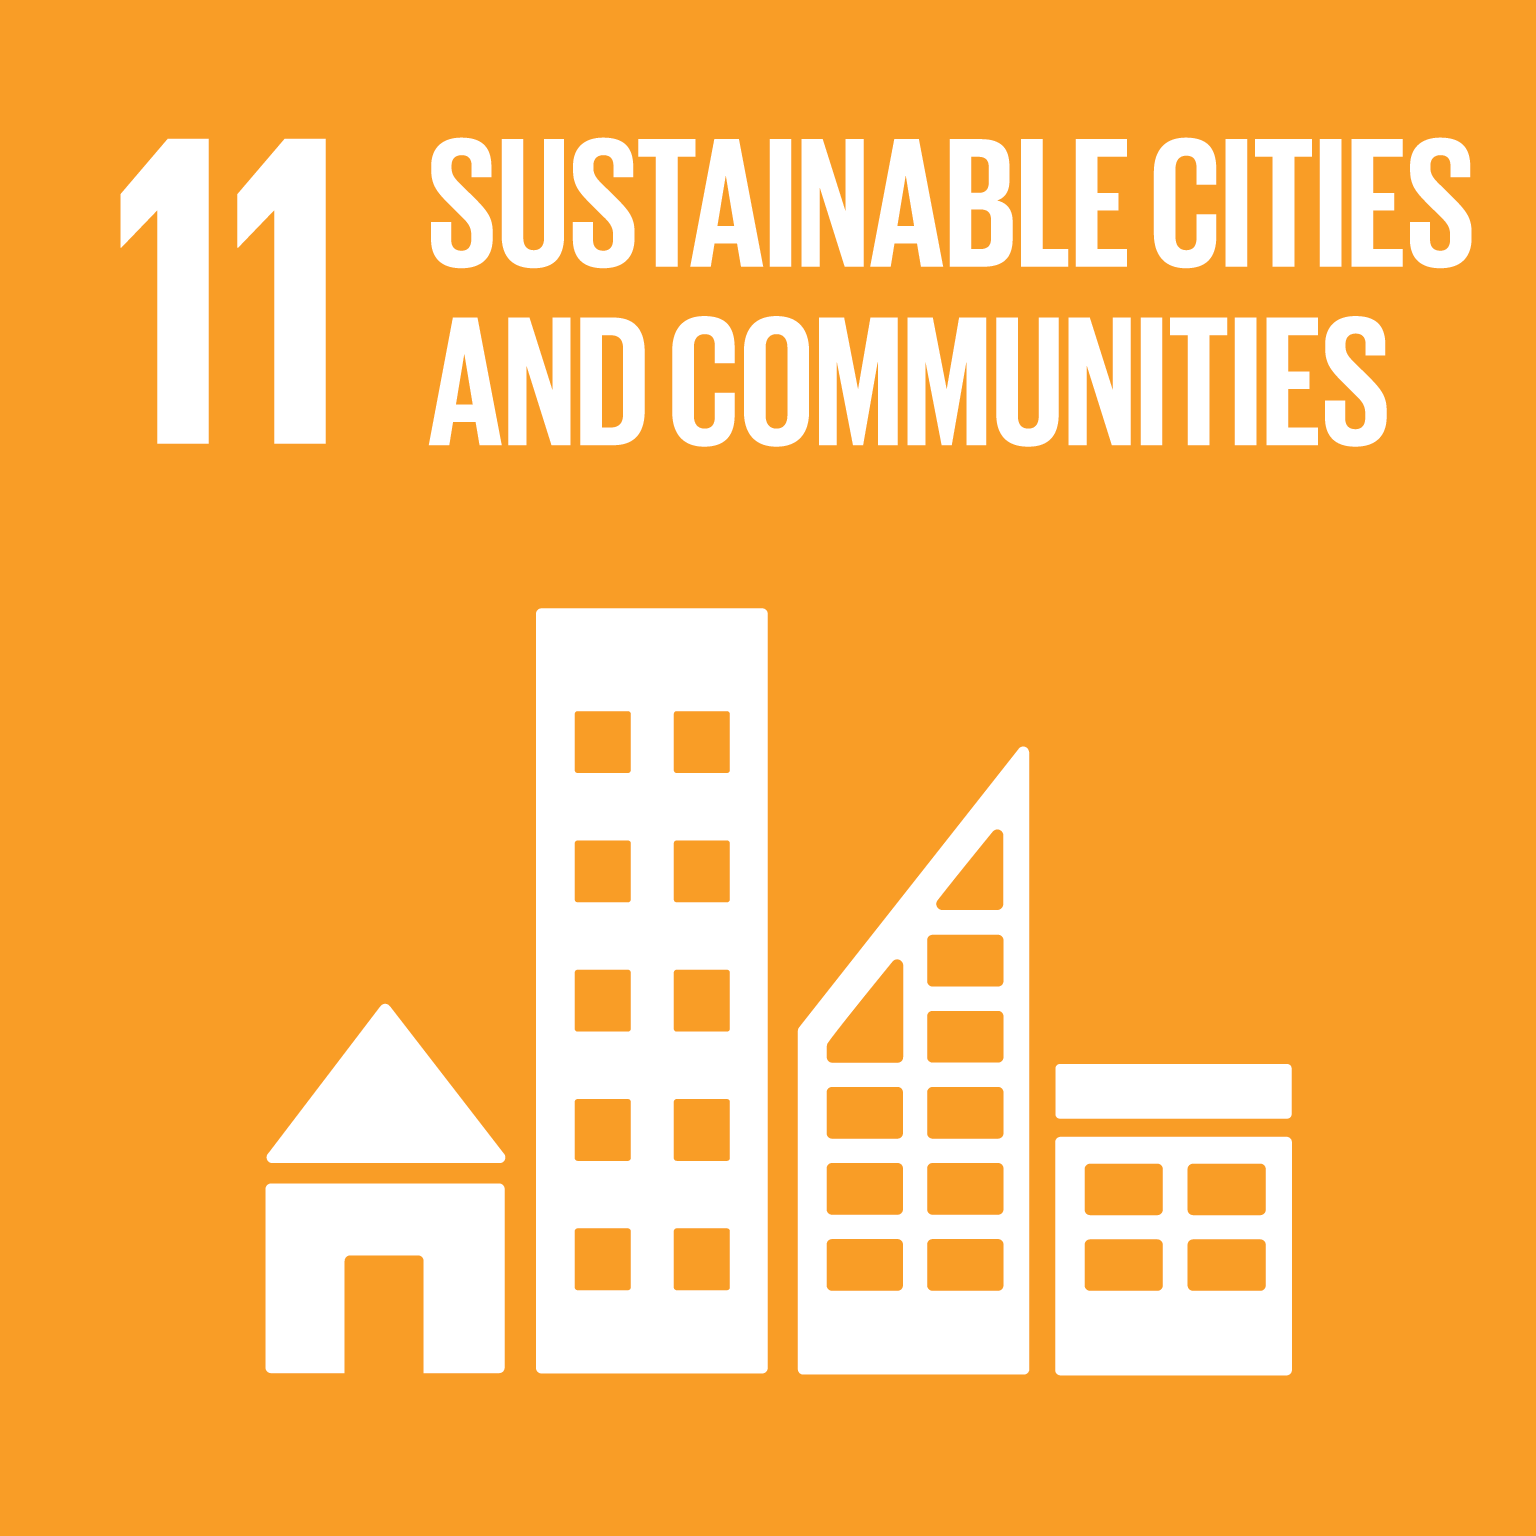 Goal 11 Sustainable Communities